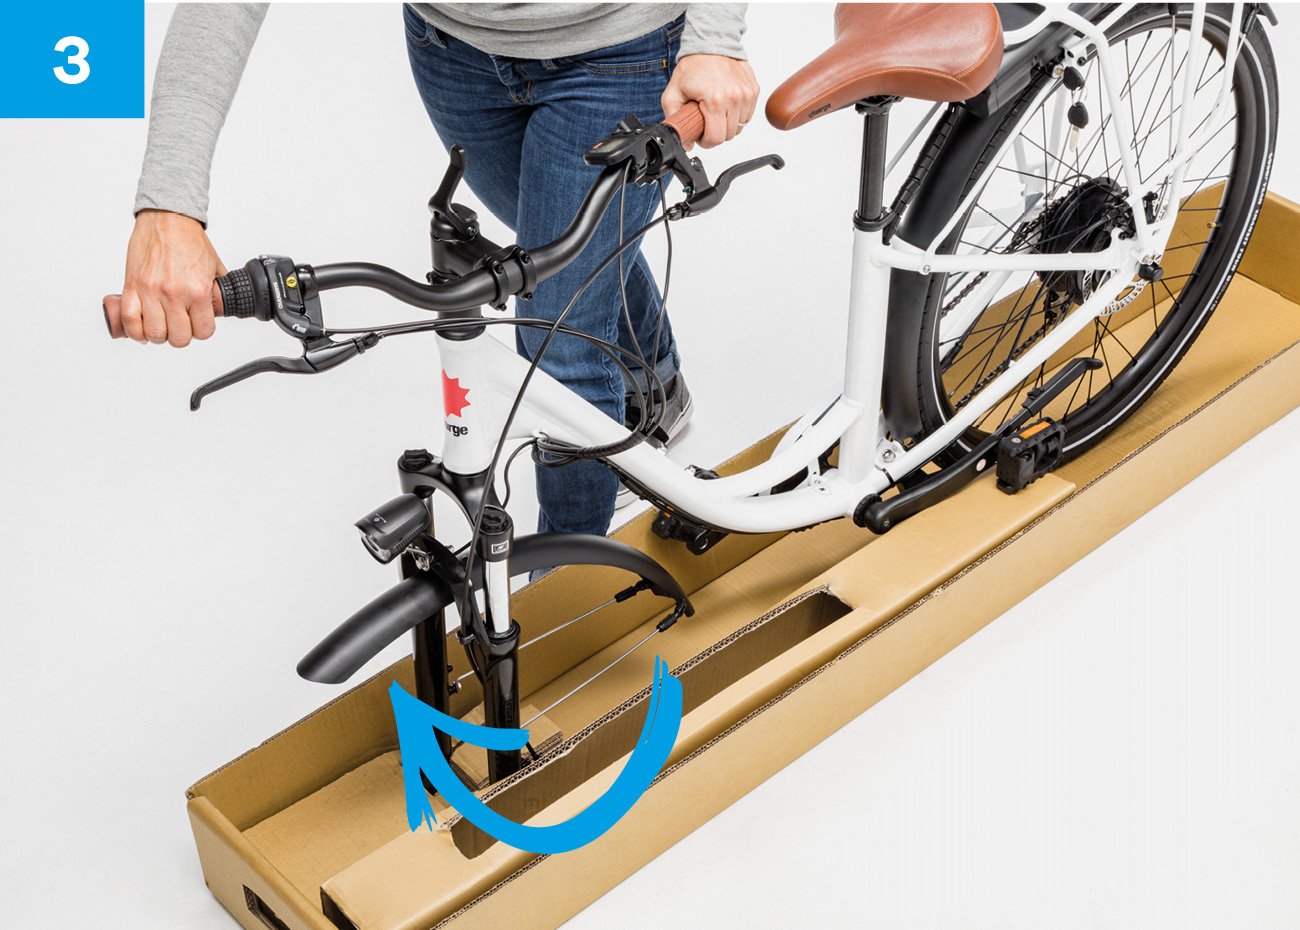 Electric hybrid bike assembly instructions